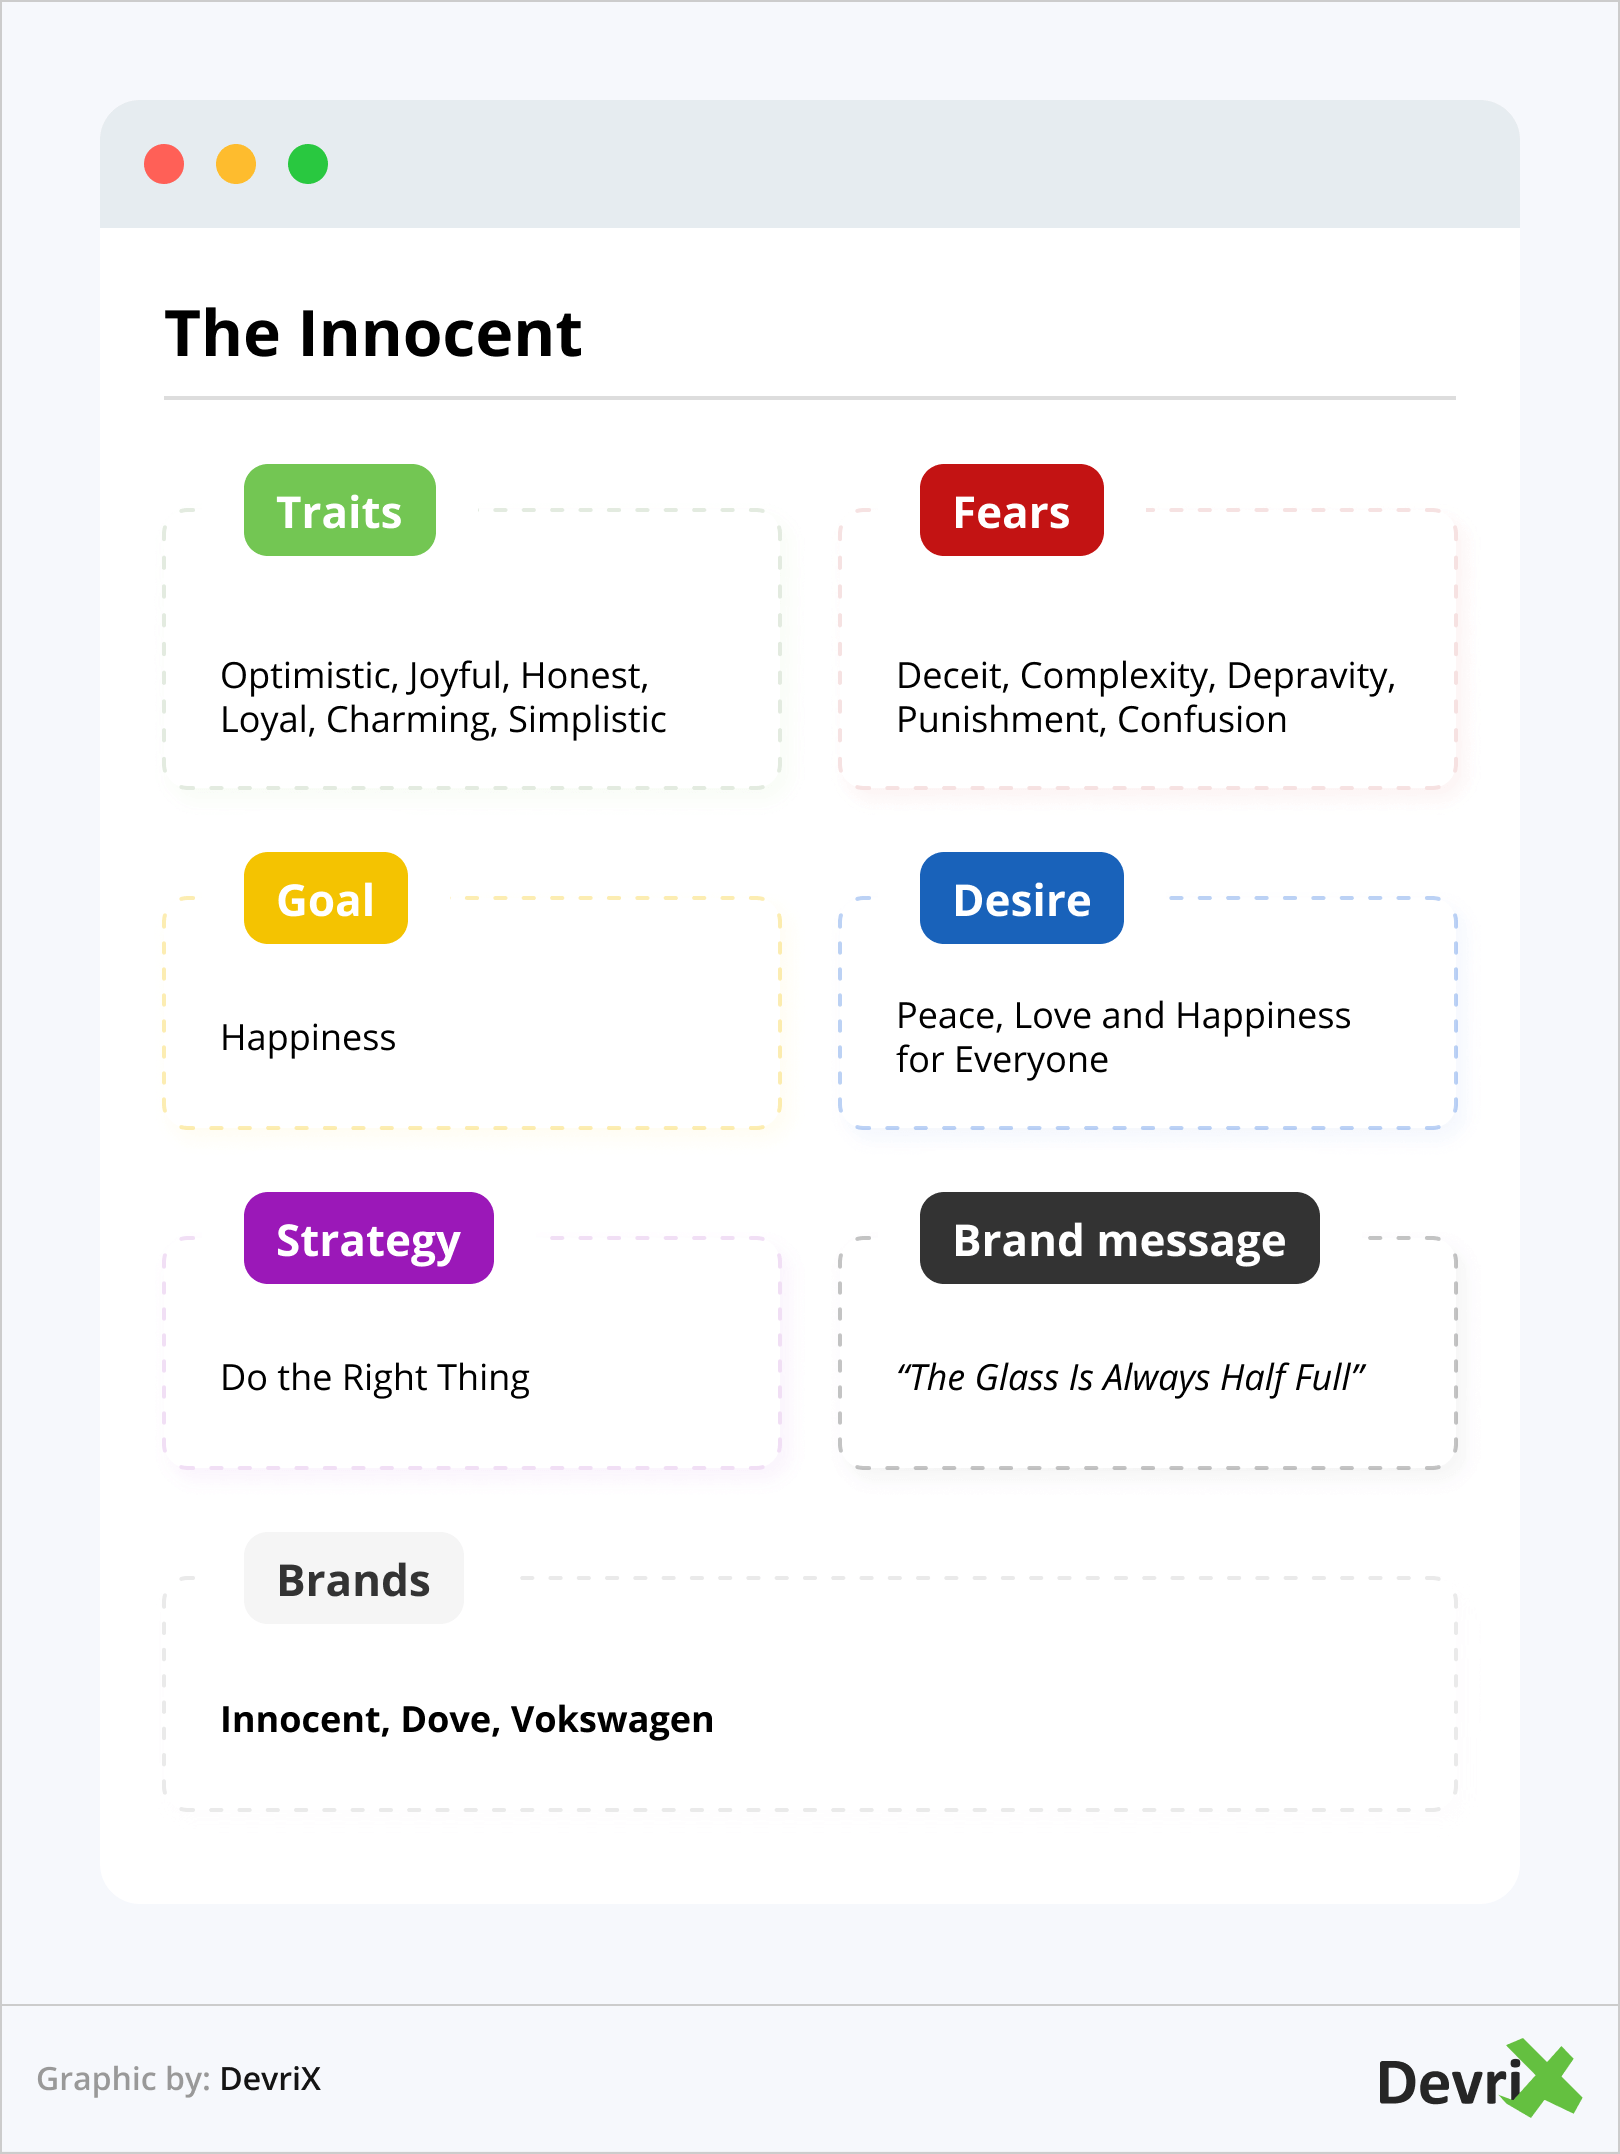 Brand Archetype - The Innocent